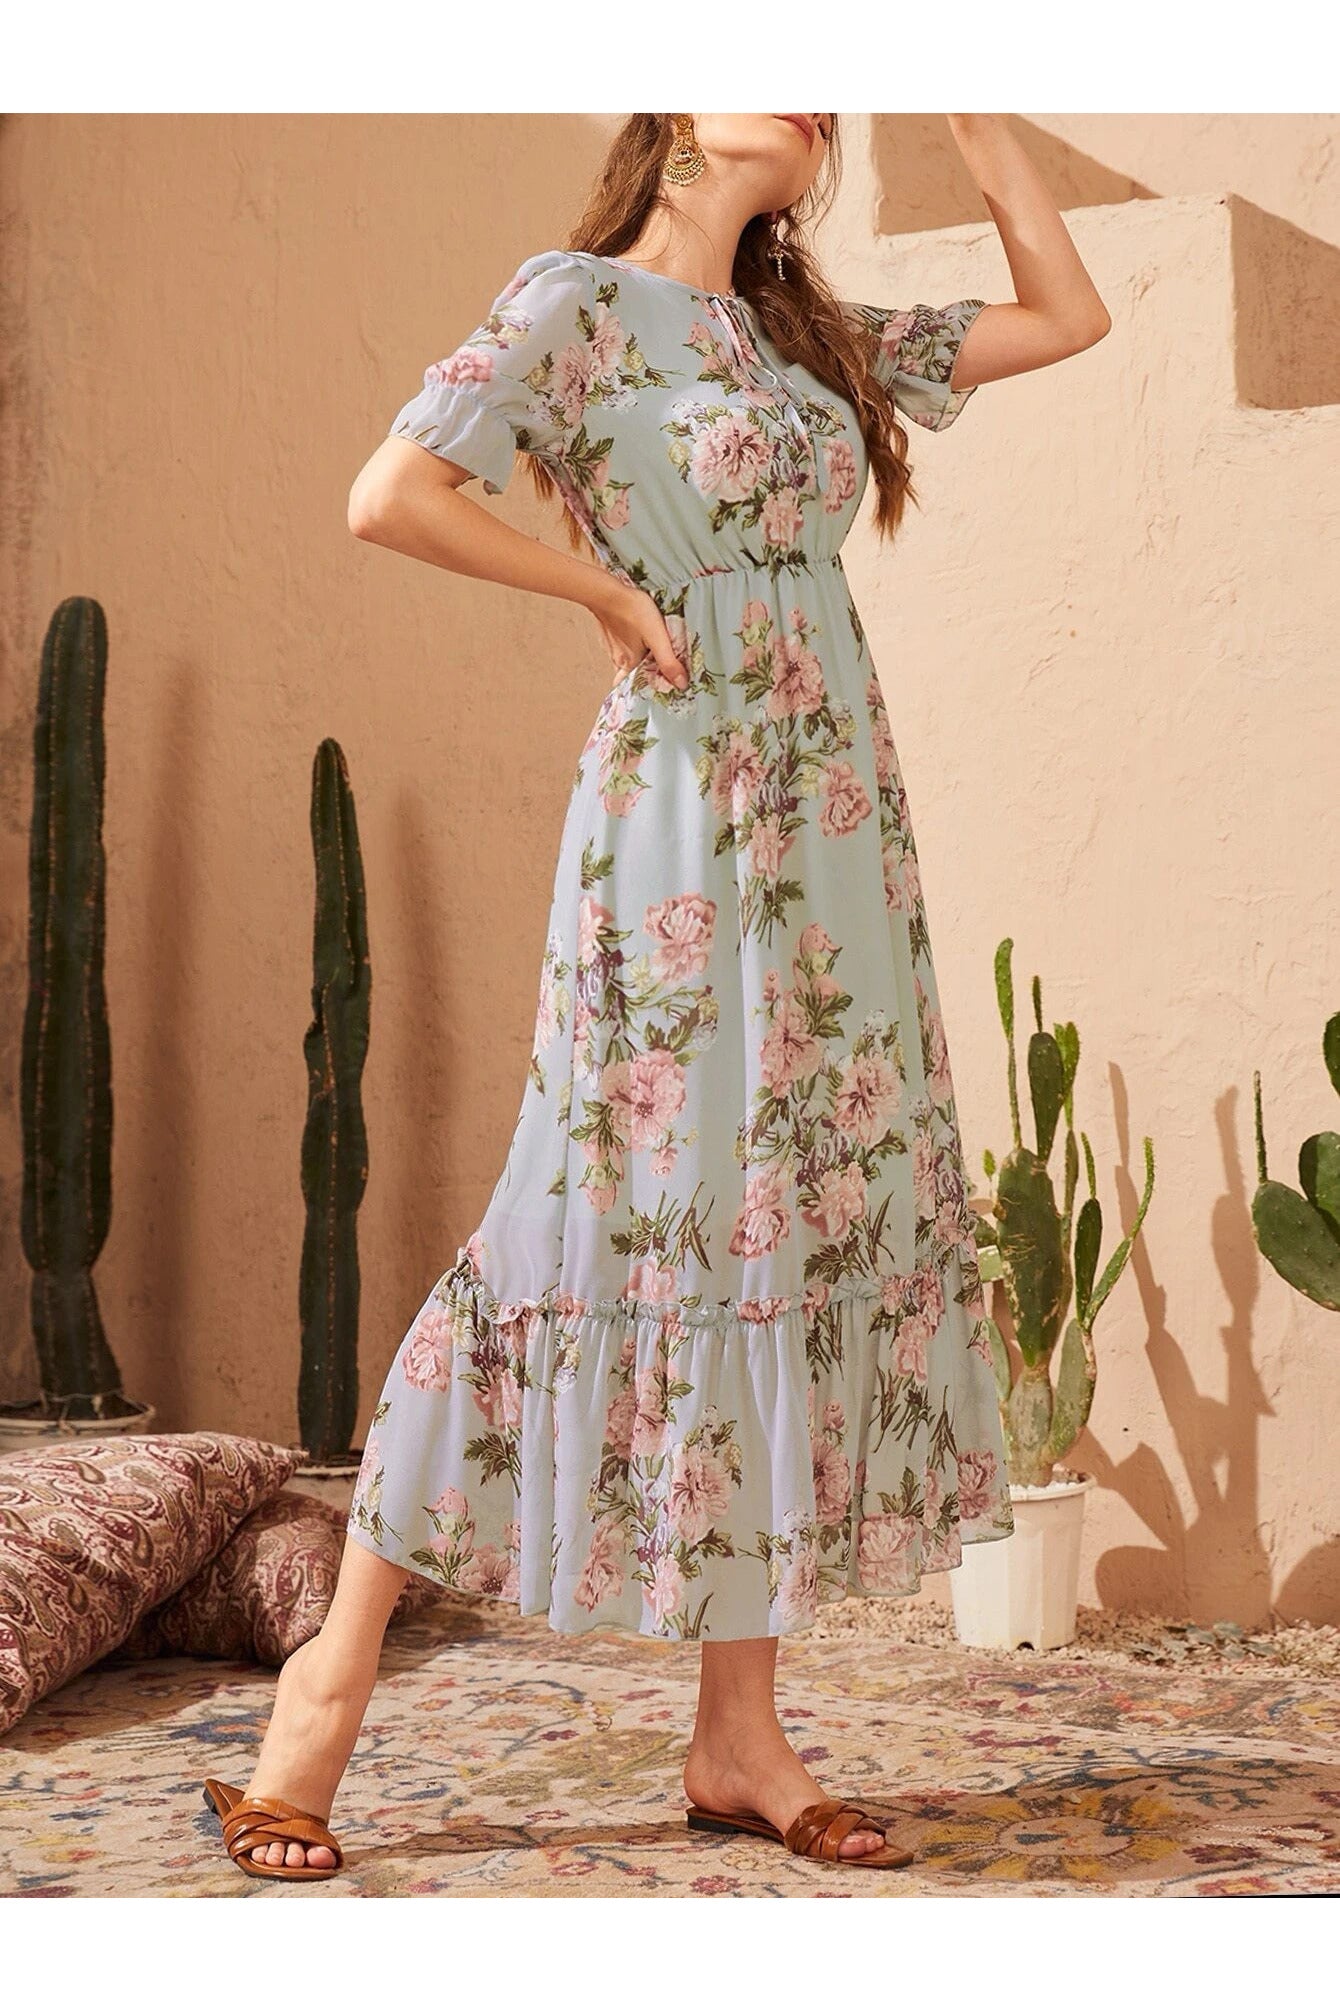 Buy Shein Floral Print Tie Front Flounce Sleeve Dress in Pakistan